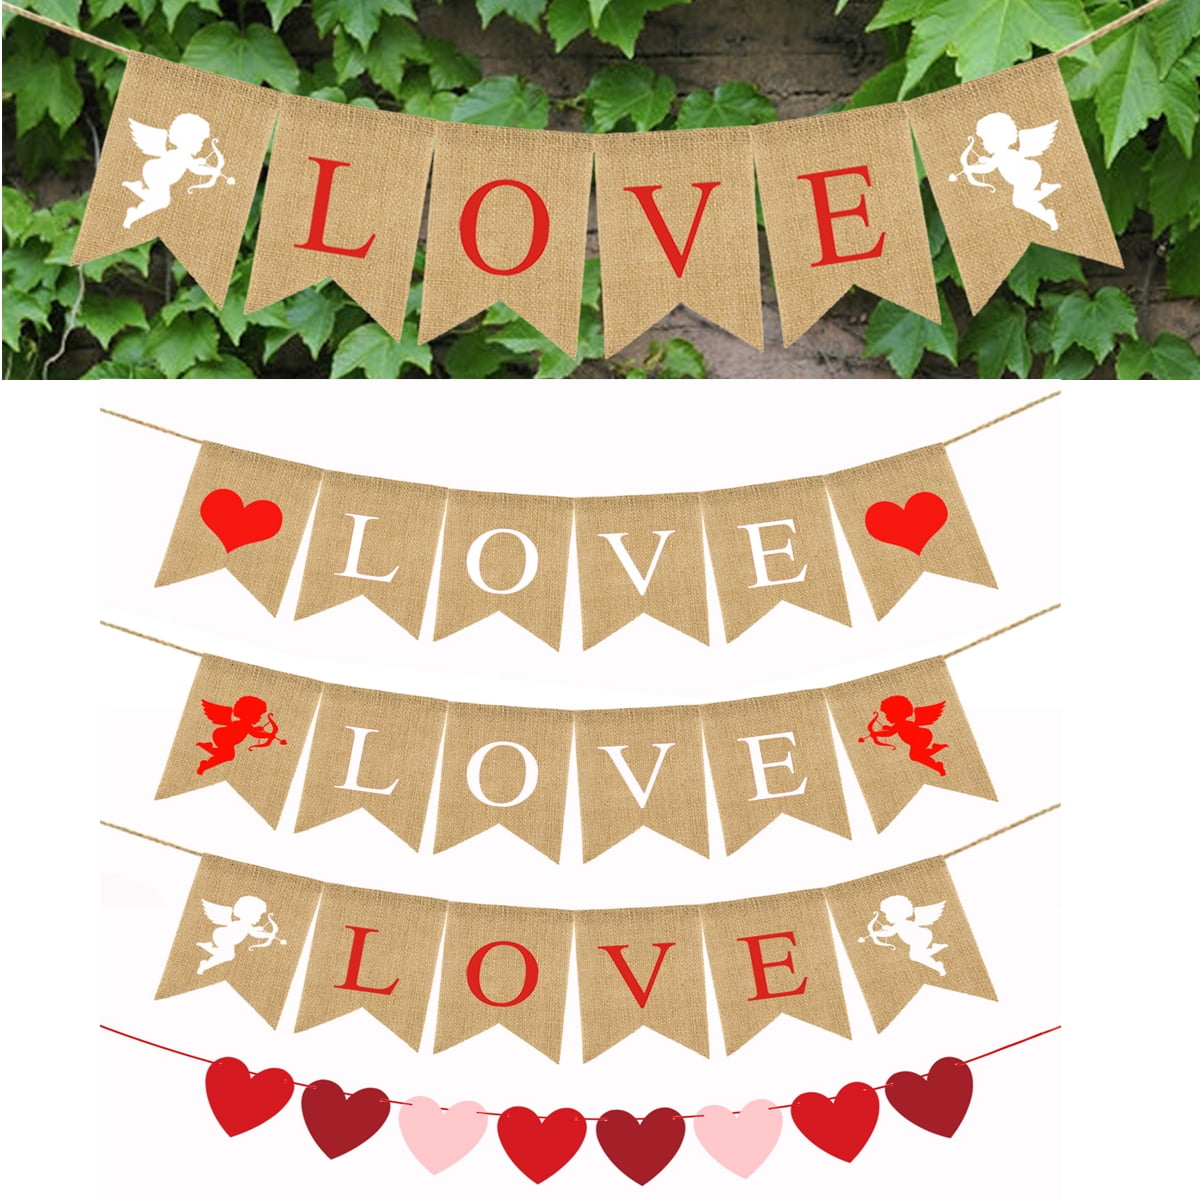 Star/Heart/Round Shape Paper Bunting Garland Banner Wedding Birthday Party Decor 